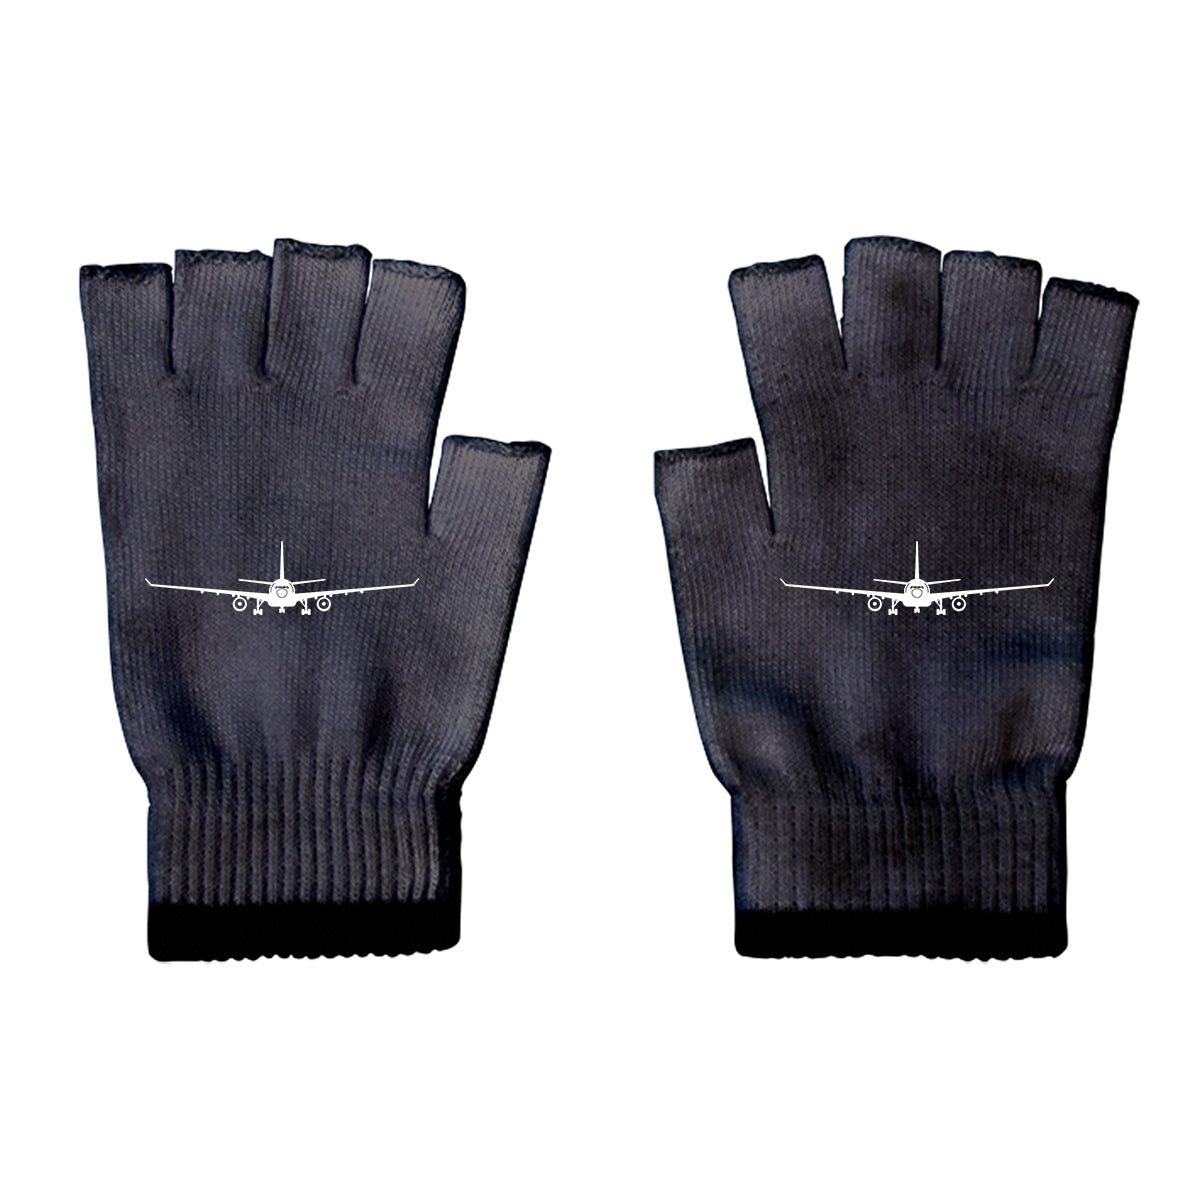 Airbus A330 Silhouette Designed Cut Gloves